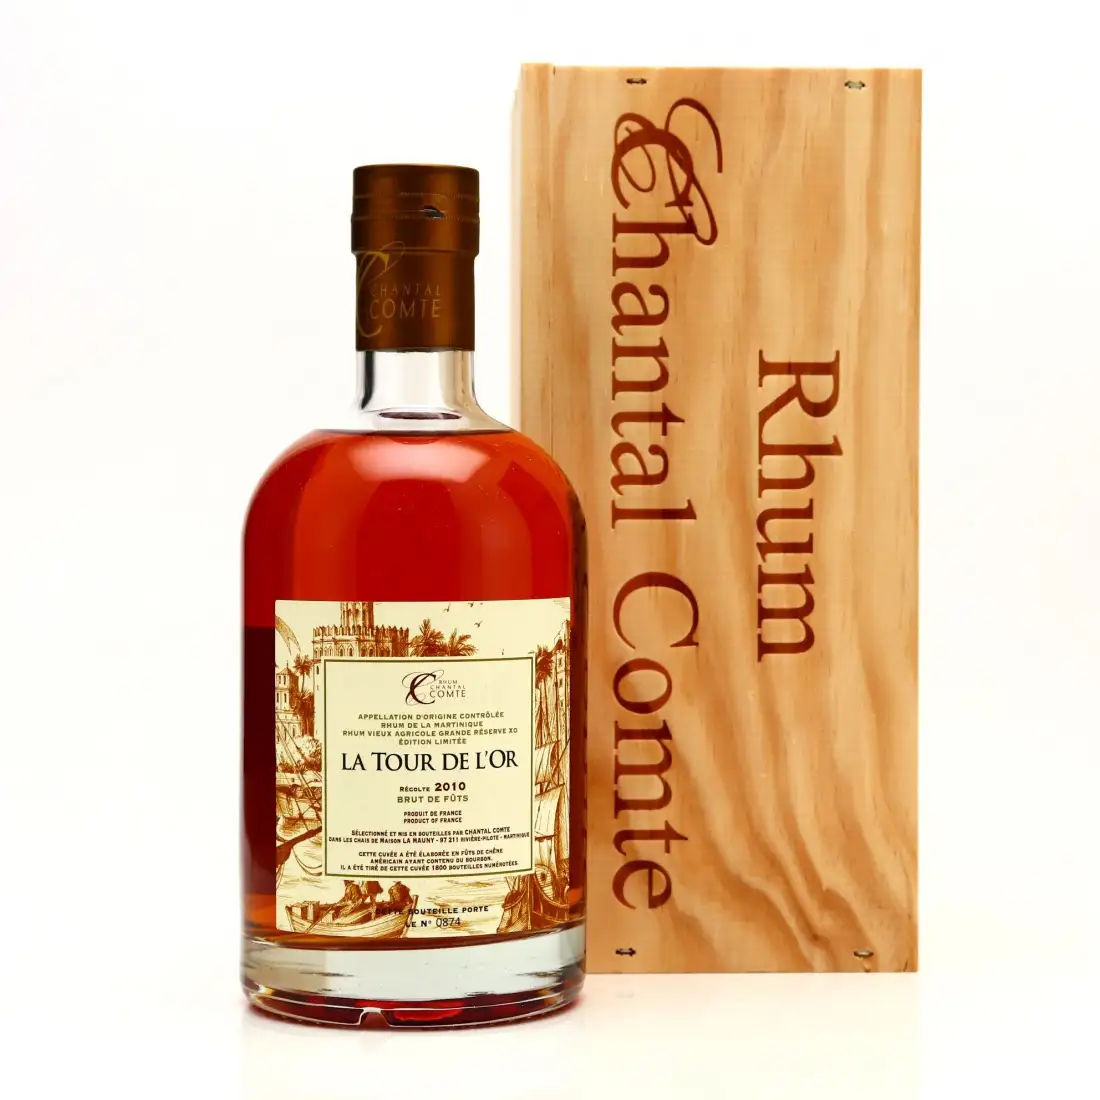 Image of the front of the bottle of the rum La Tour de L'or